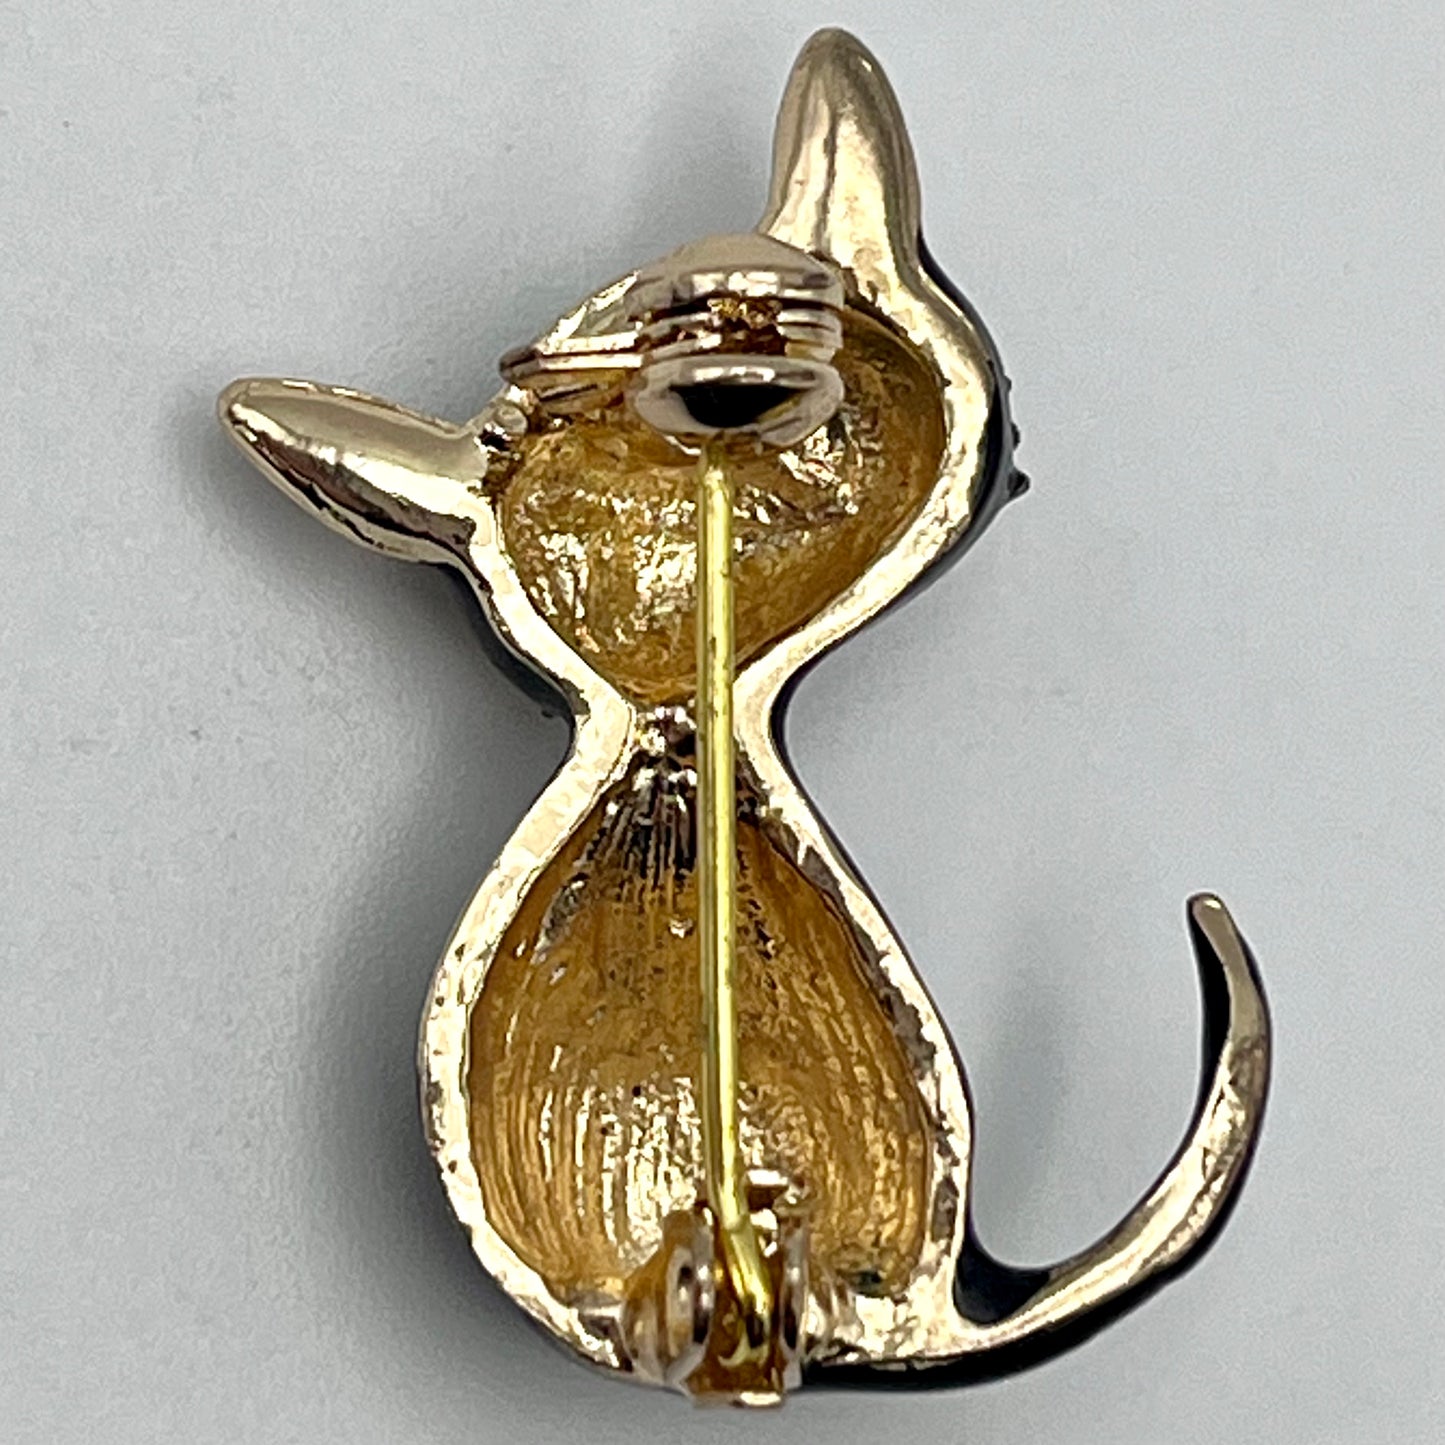 1980s Enamel Black Cat Pin